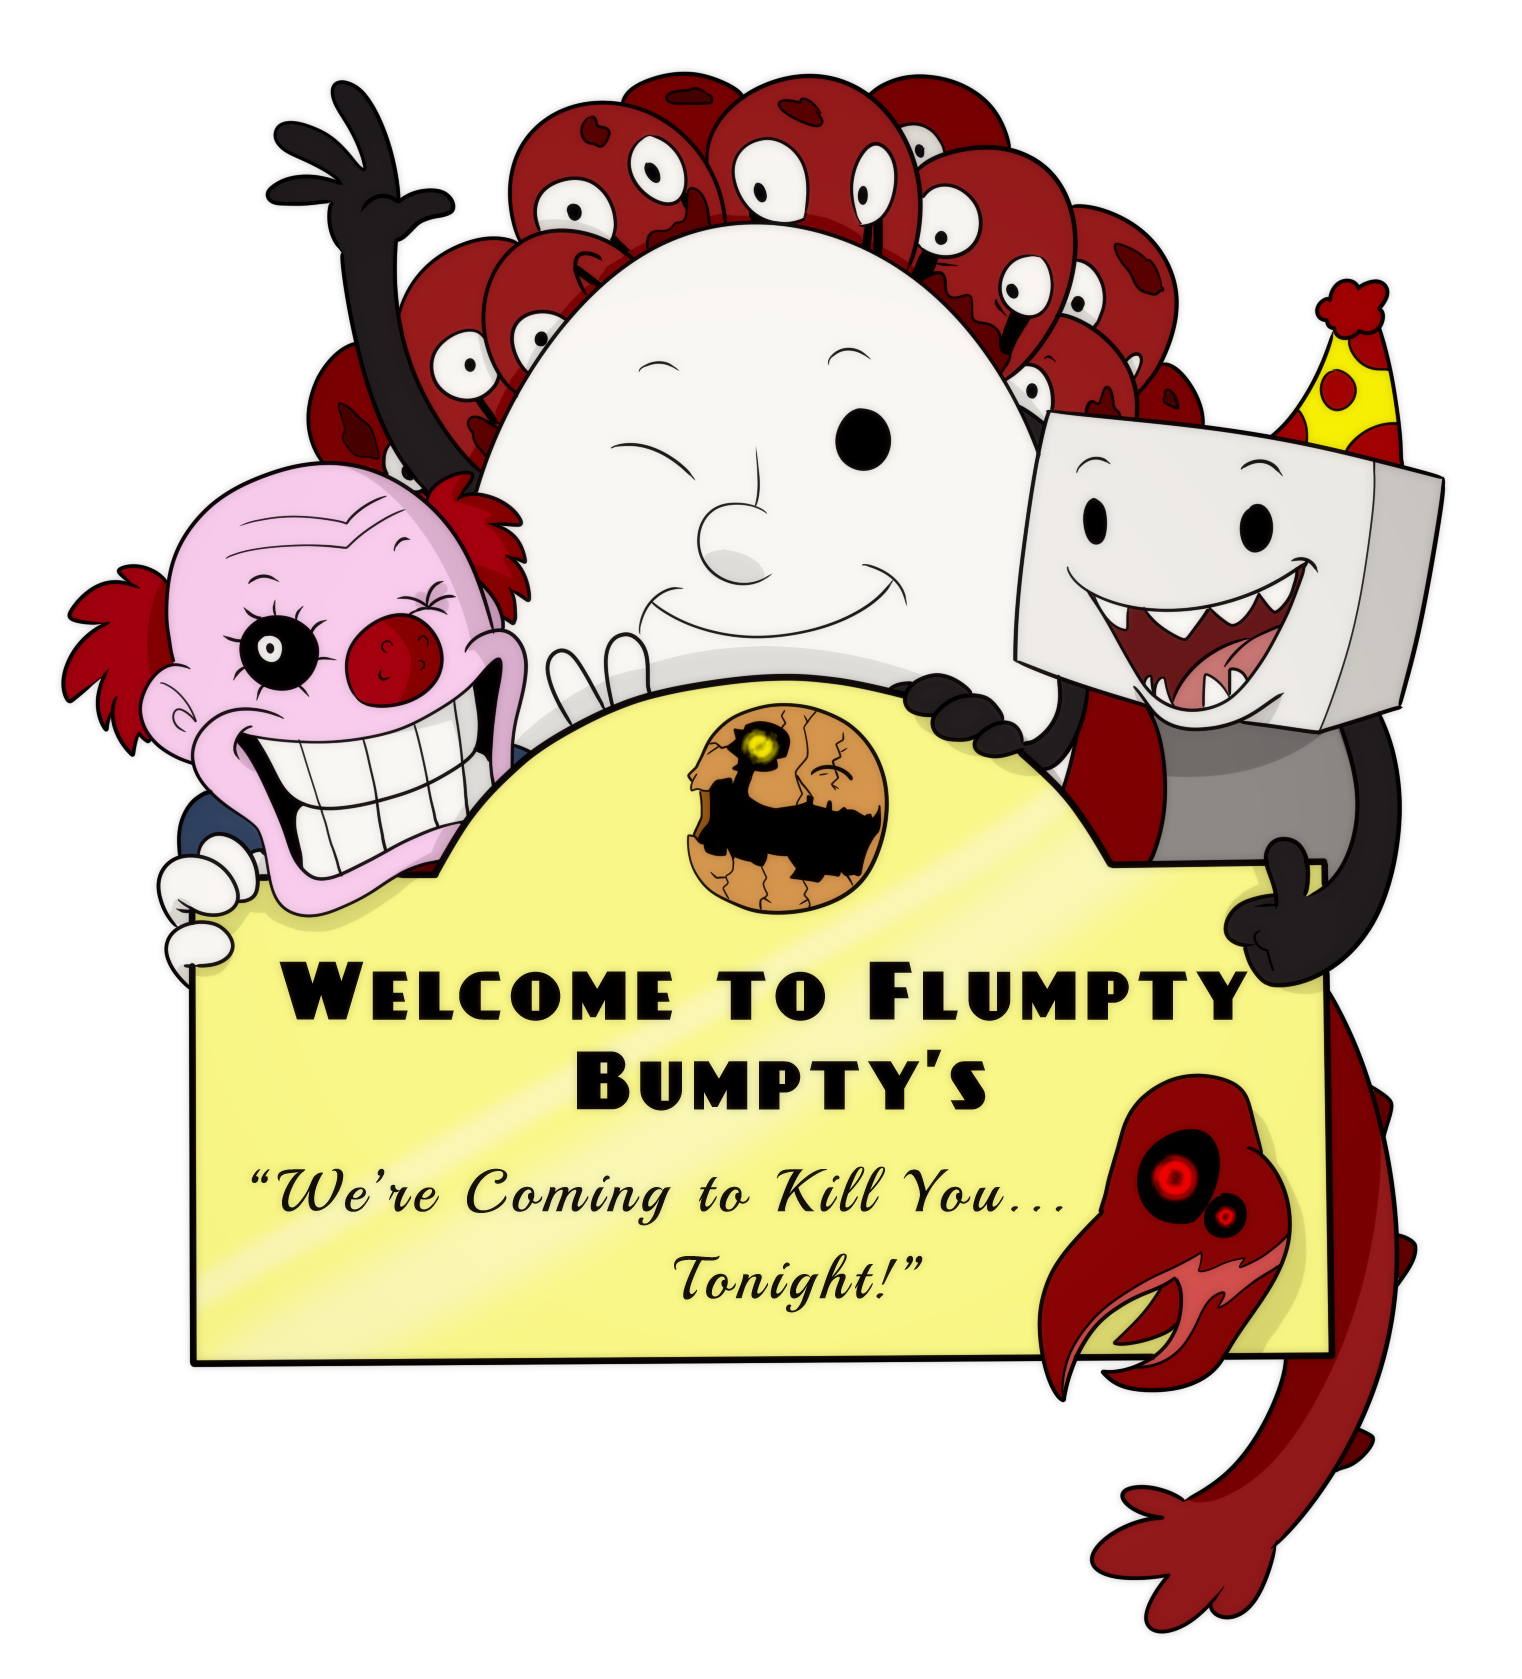 Flumpty's:One last Night Screen : r/OneNightAtFlumptys